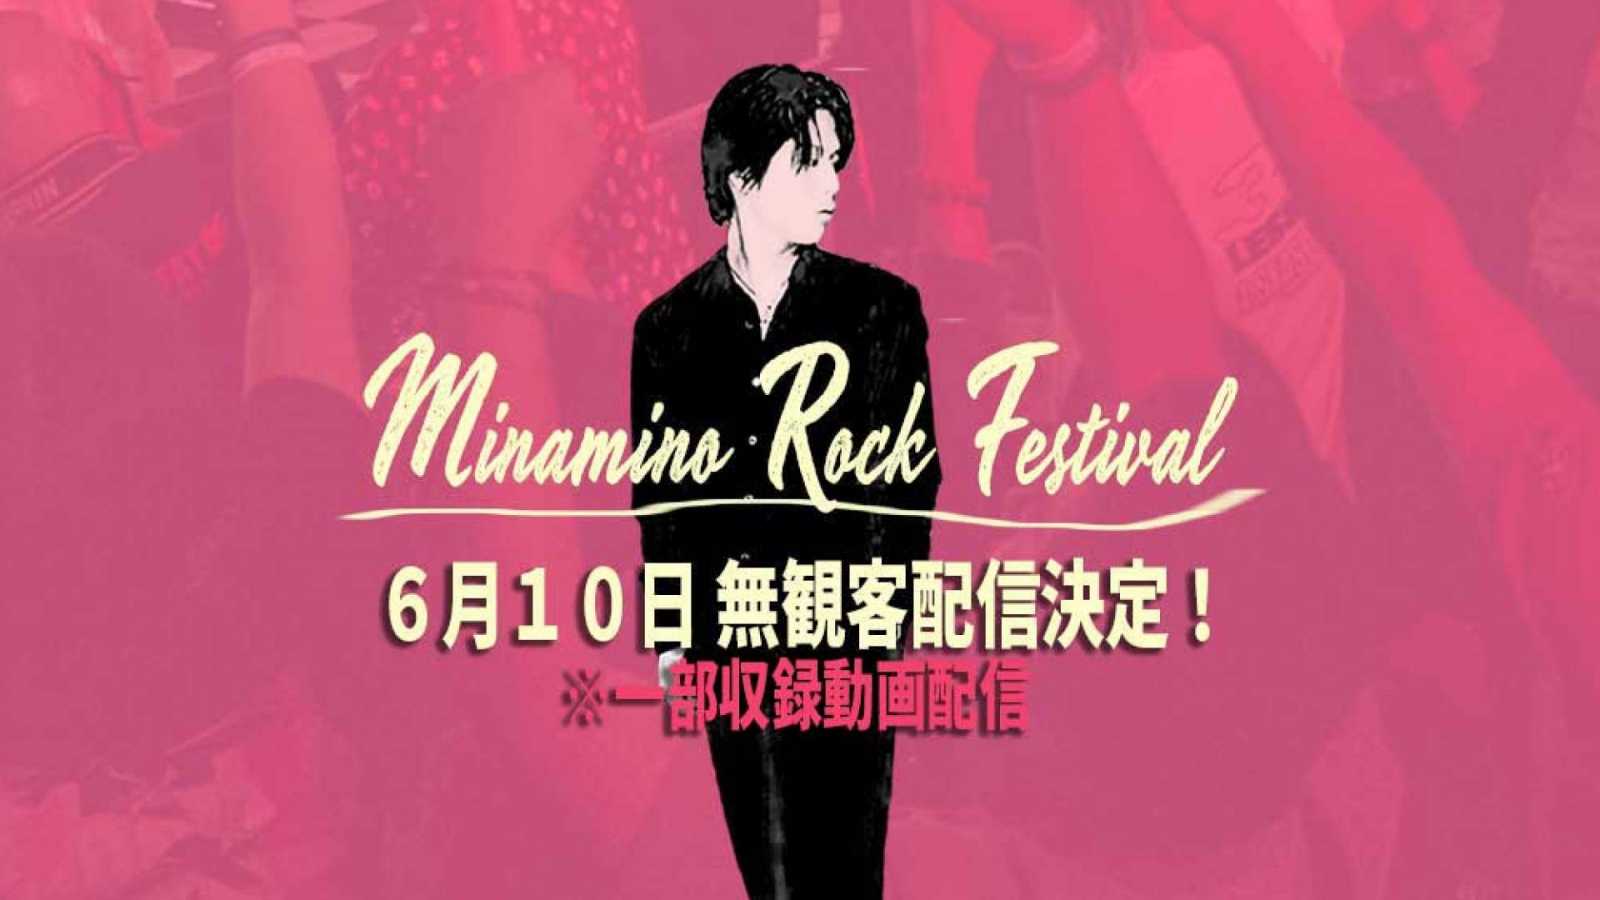 Minamino Rock Festival 2020 to Stream Worldwide © Minamino Rock Festival. All rights reserved.